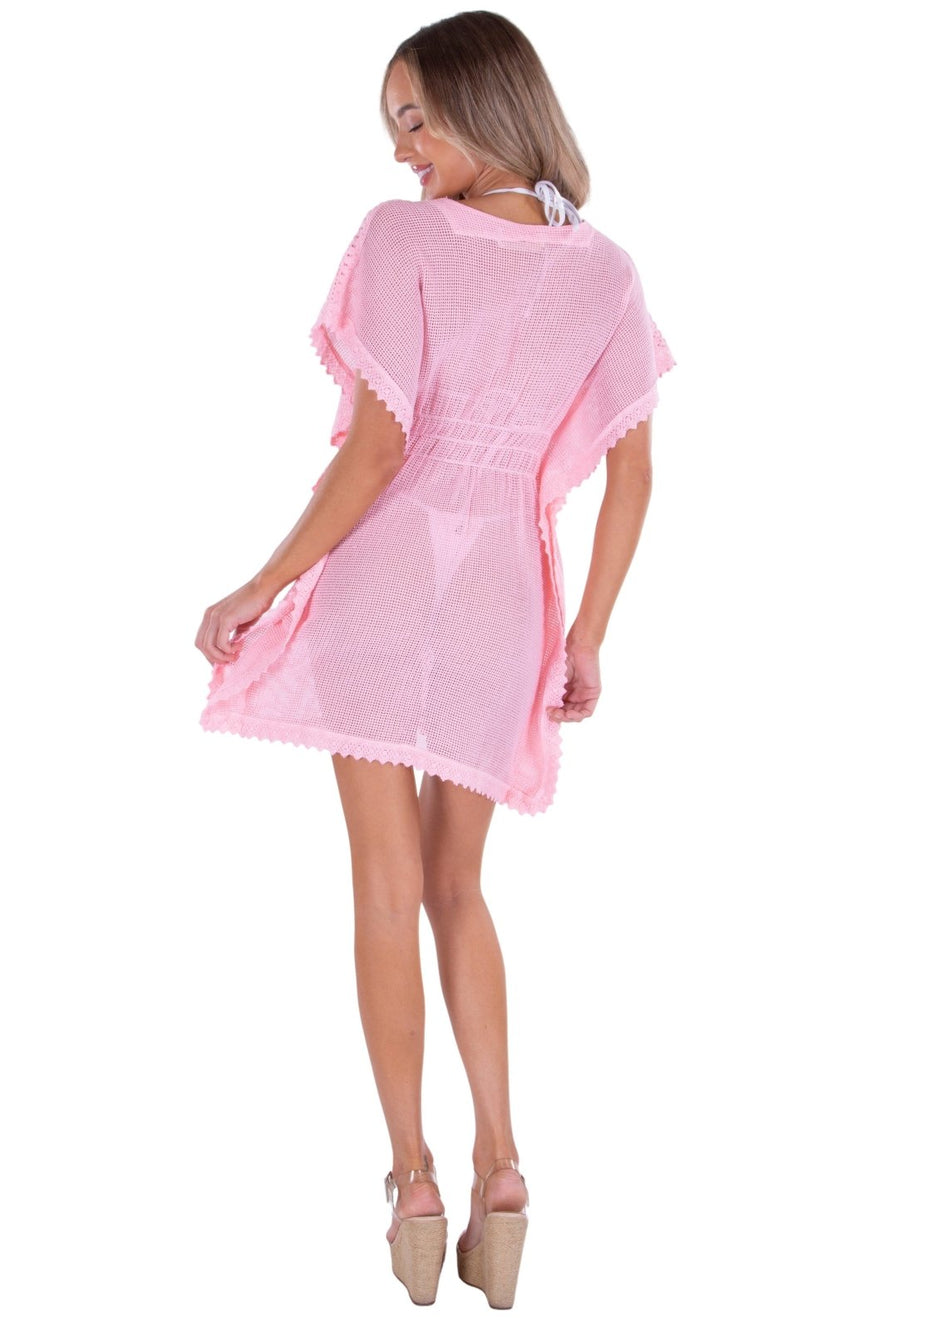 100% Cotton 'Aquamarine' Mesh Cotton Cover-Up Baby Pink - Seaspice Resort Wear